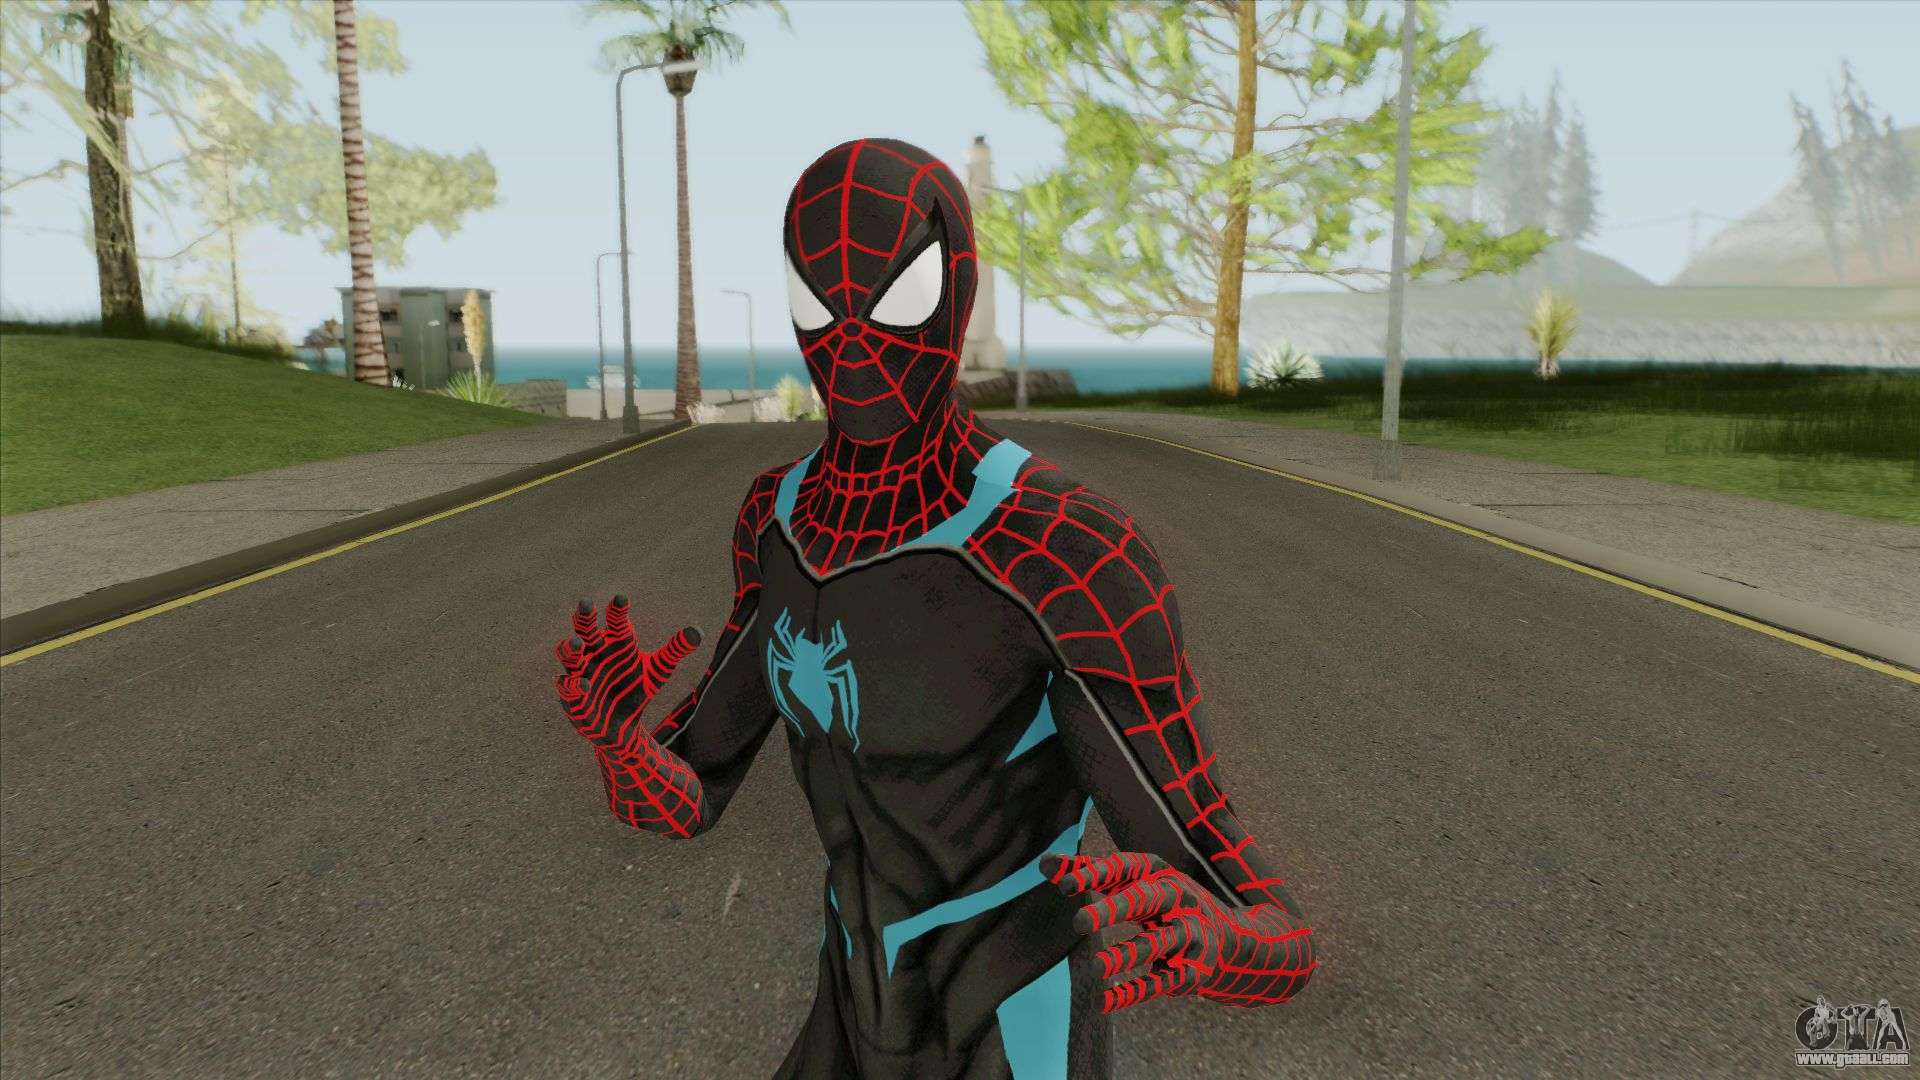 Spider-Man (Secret War Suit) for GTA San Andreas